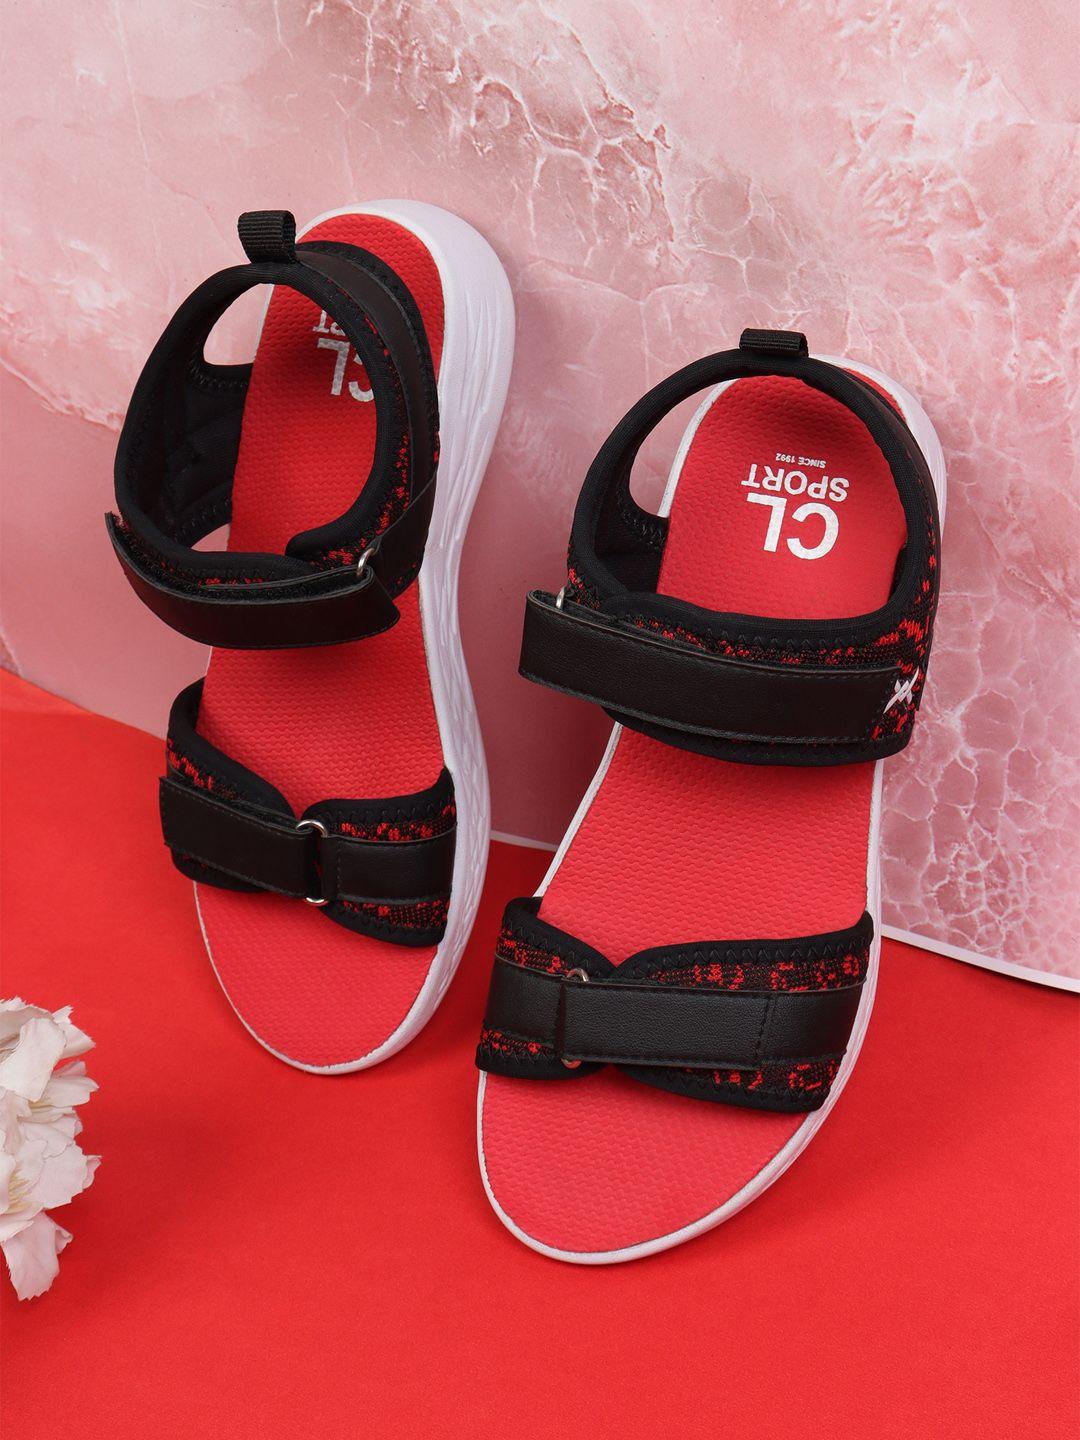 carlton london sports women red & black solid sports sandals